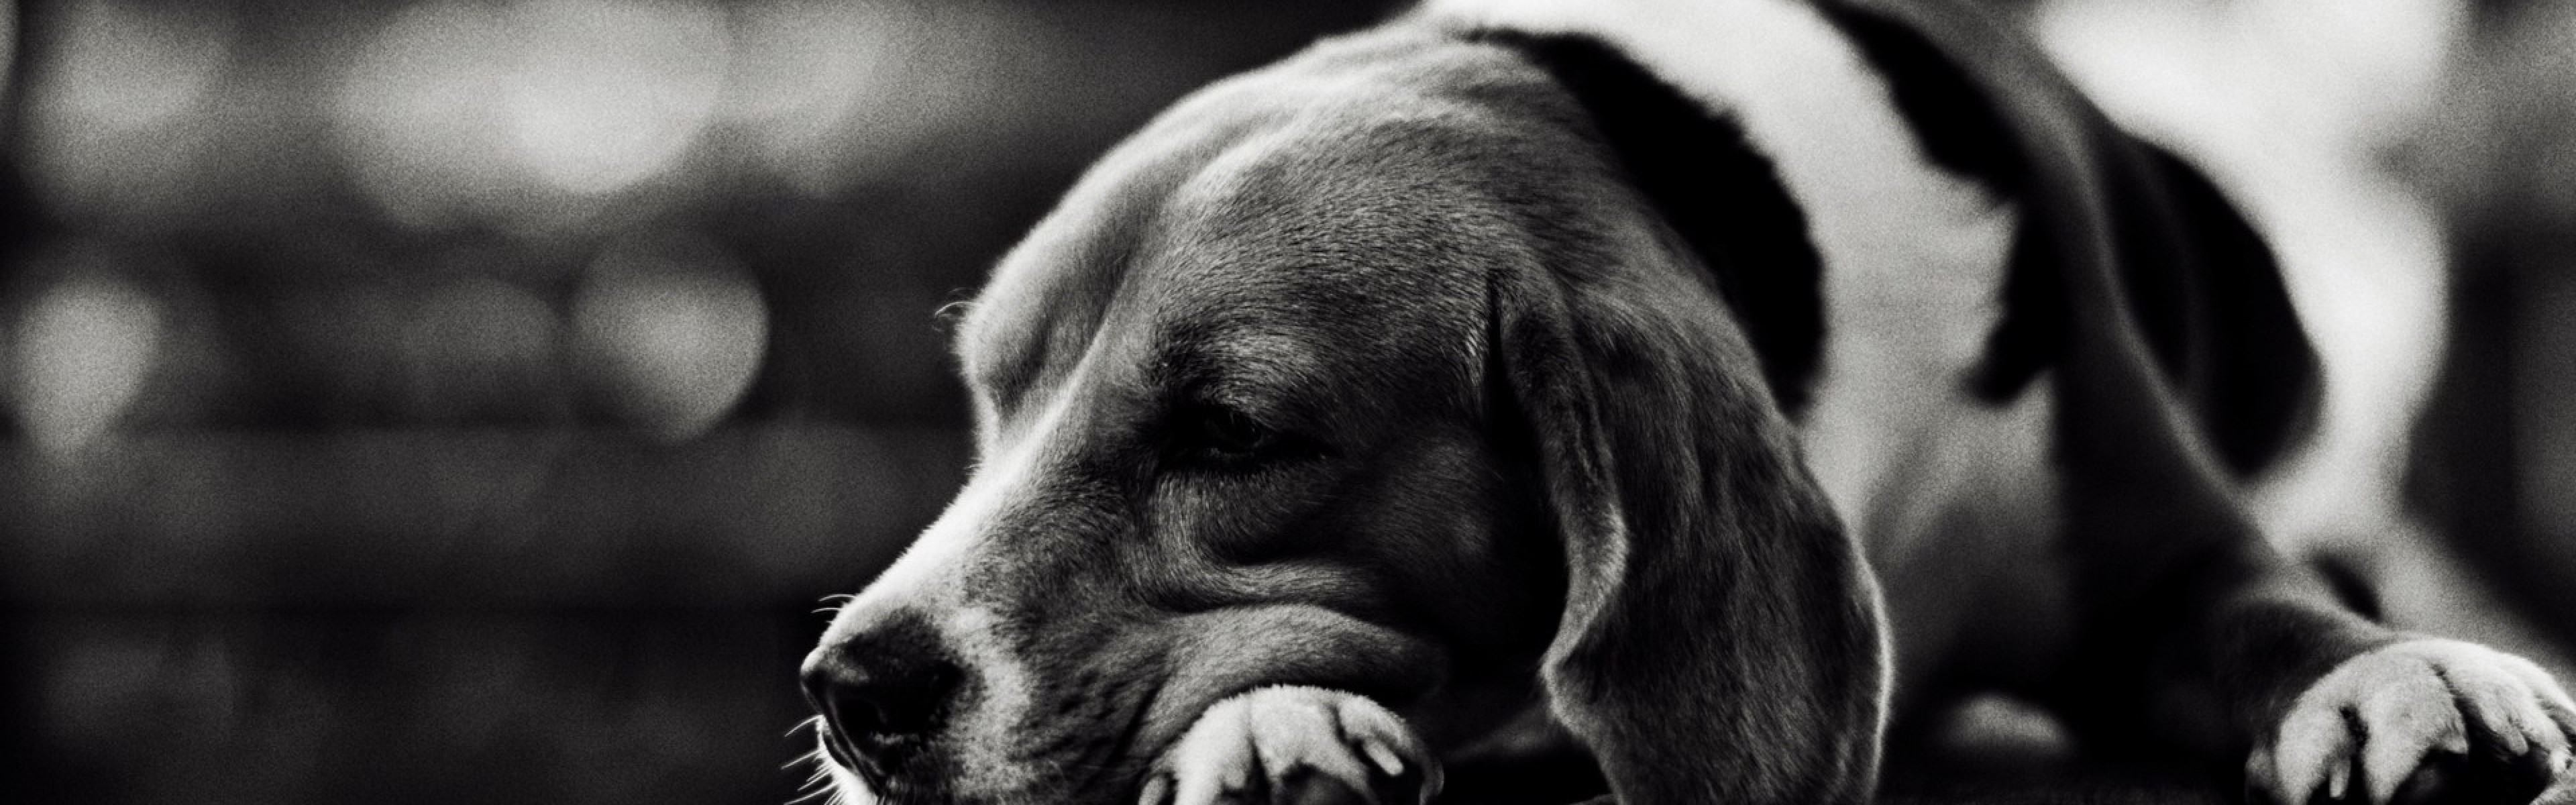 3840x1200  Wallpaper dog, lie down, face, tired, sad, black white